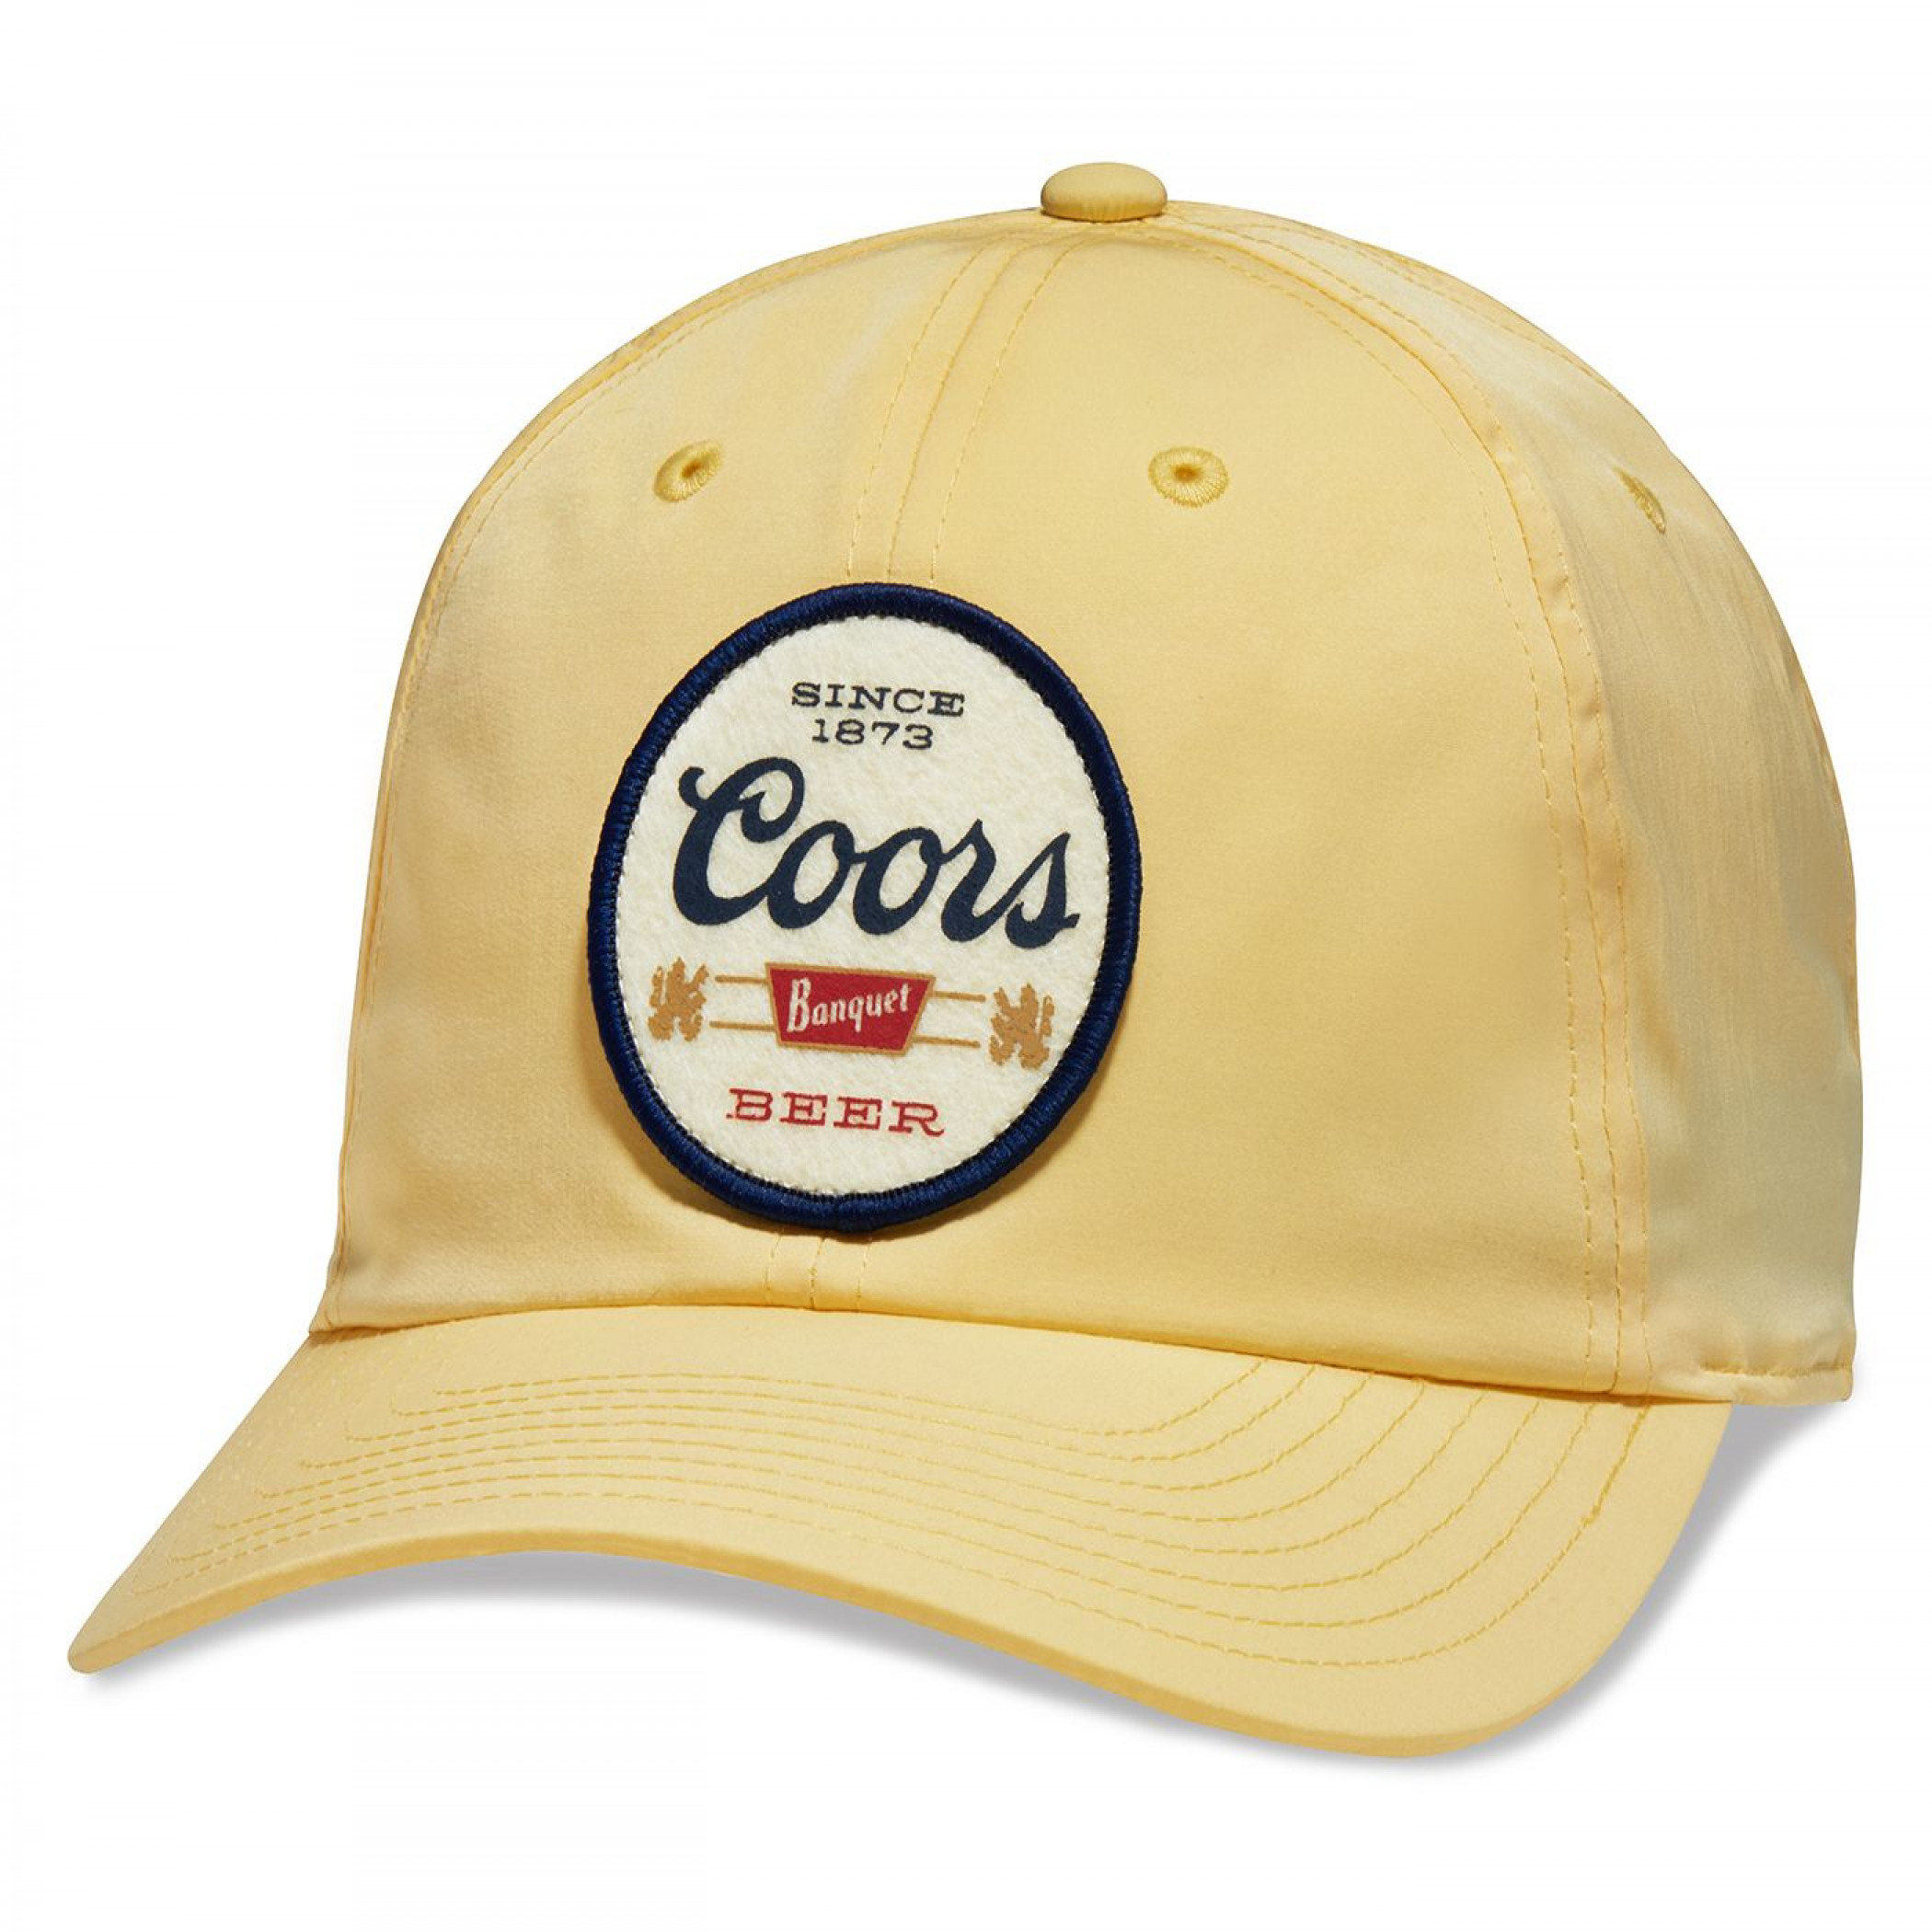 Coors Banquet Beer Since 1873 Logo Adjustable Hat